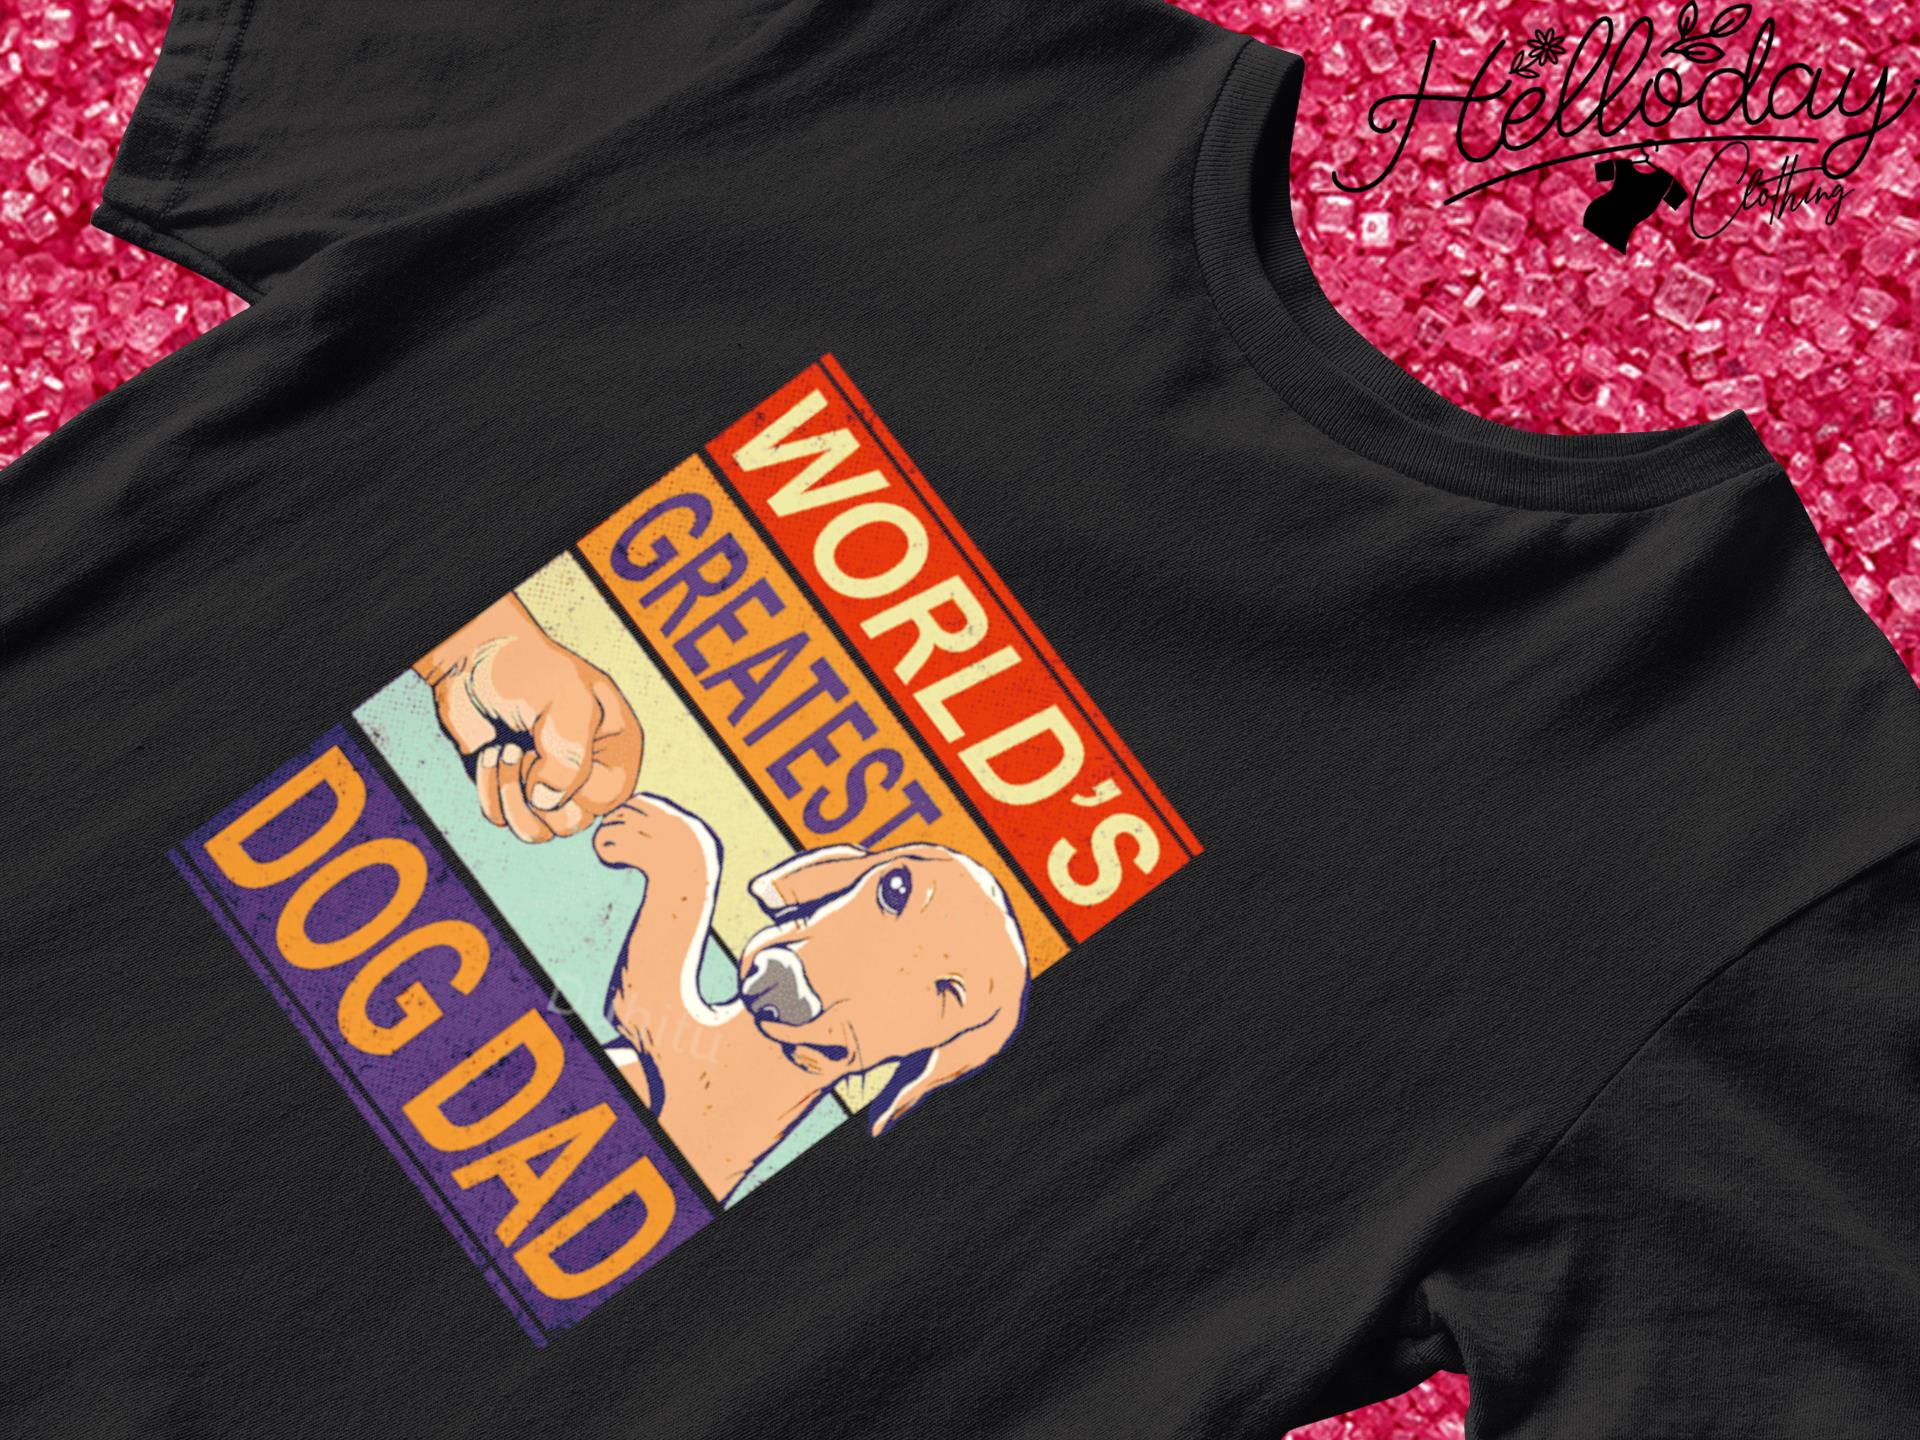 World's greatest Dogdad vintage shirt